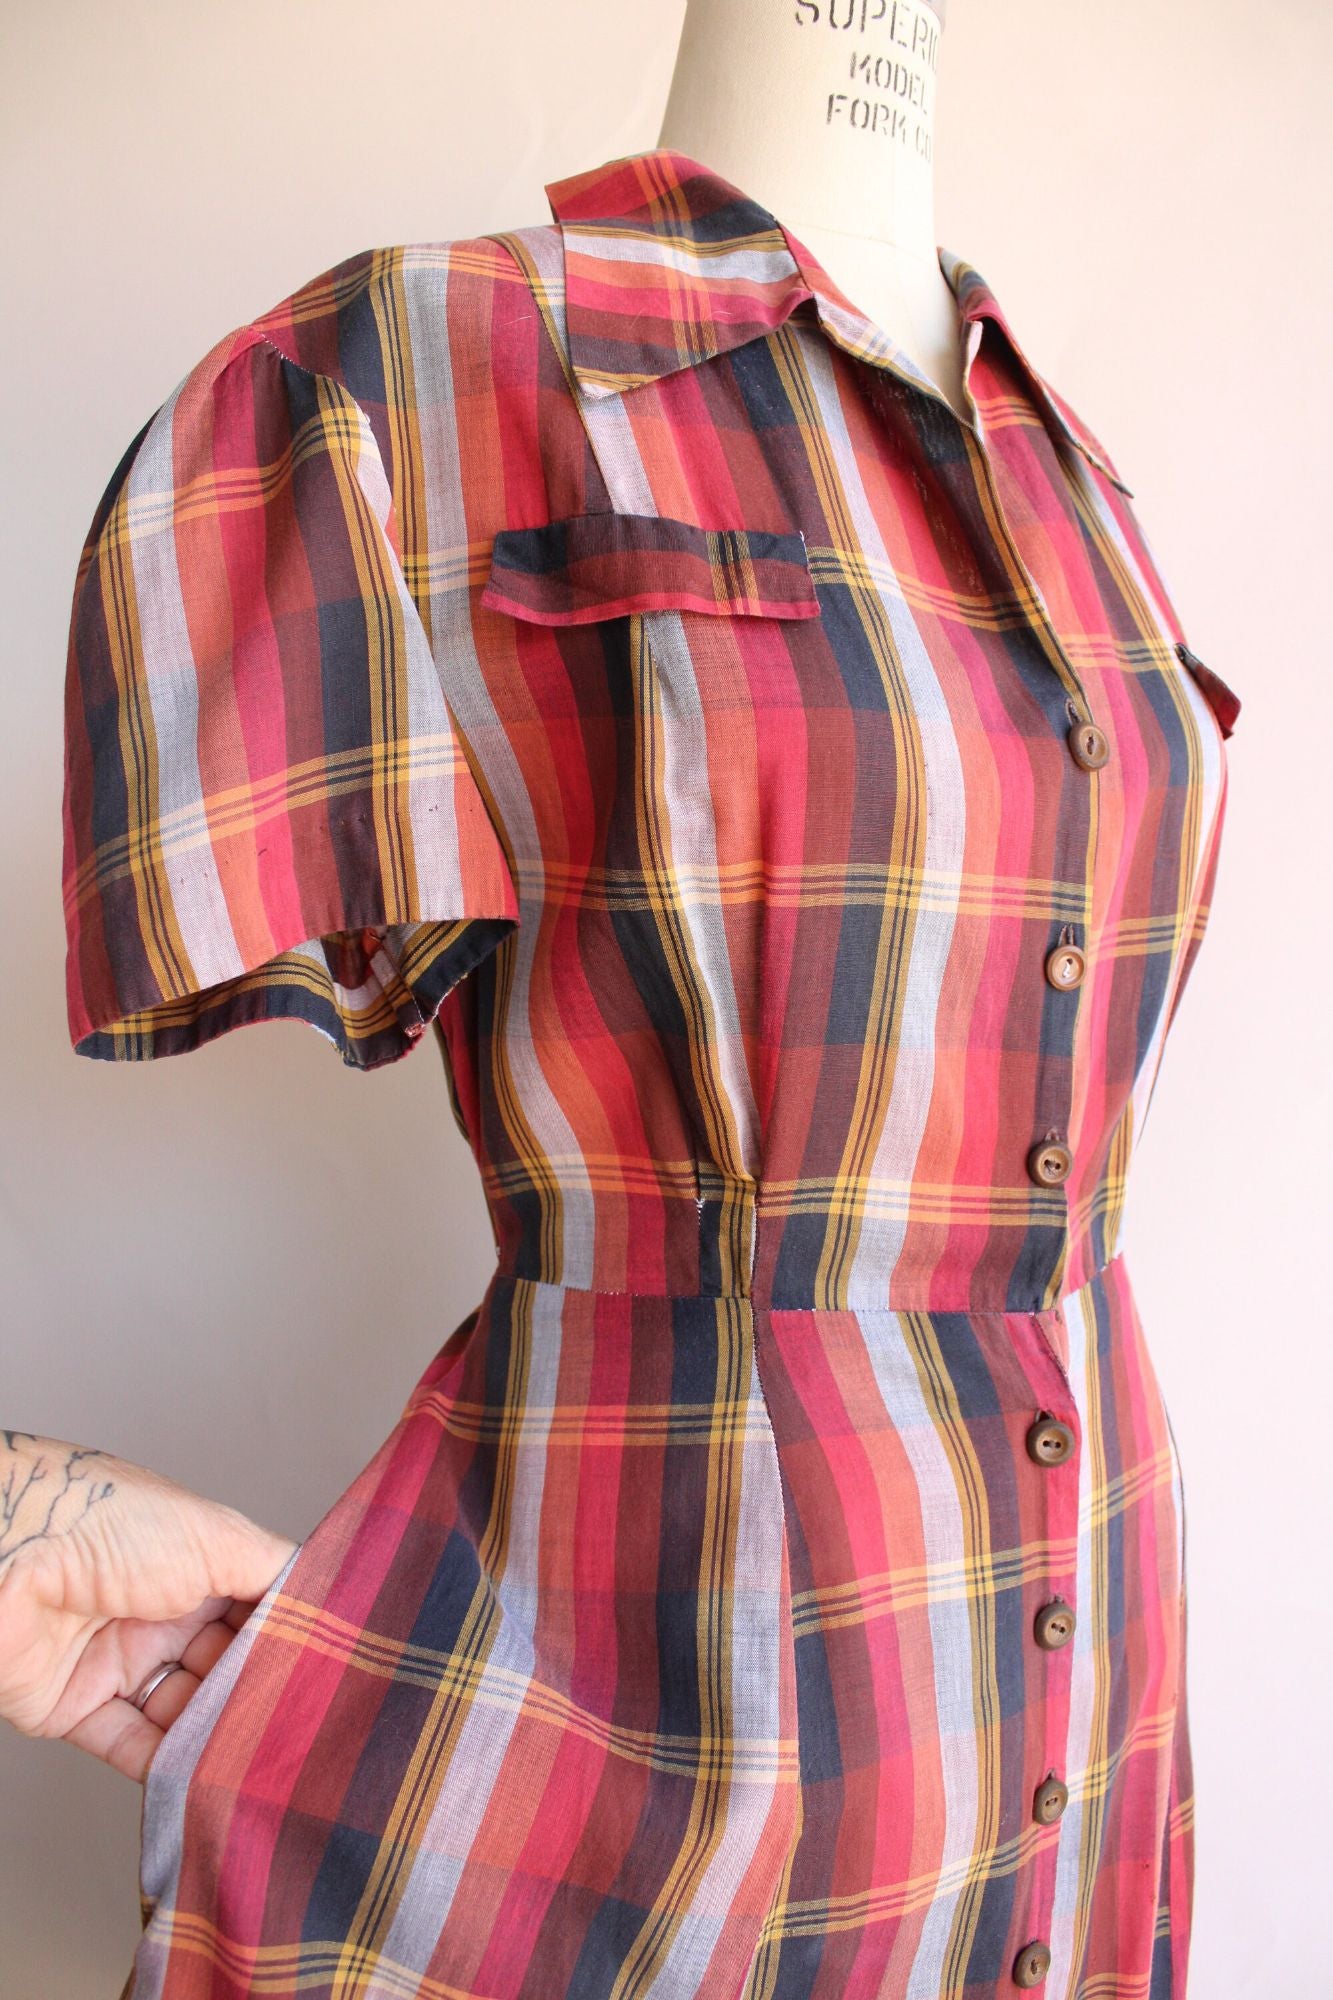 Vintage 1950s 1960s Plaid Cotton Shirtwaist Dress with Pockets